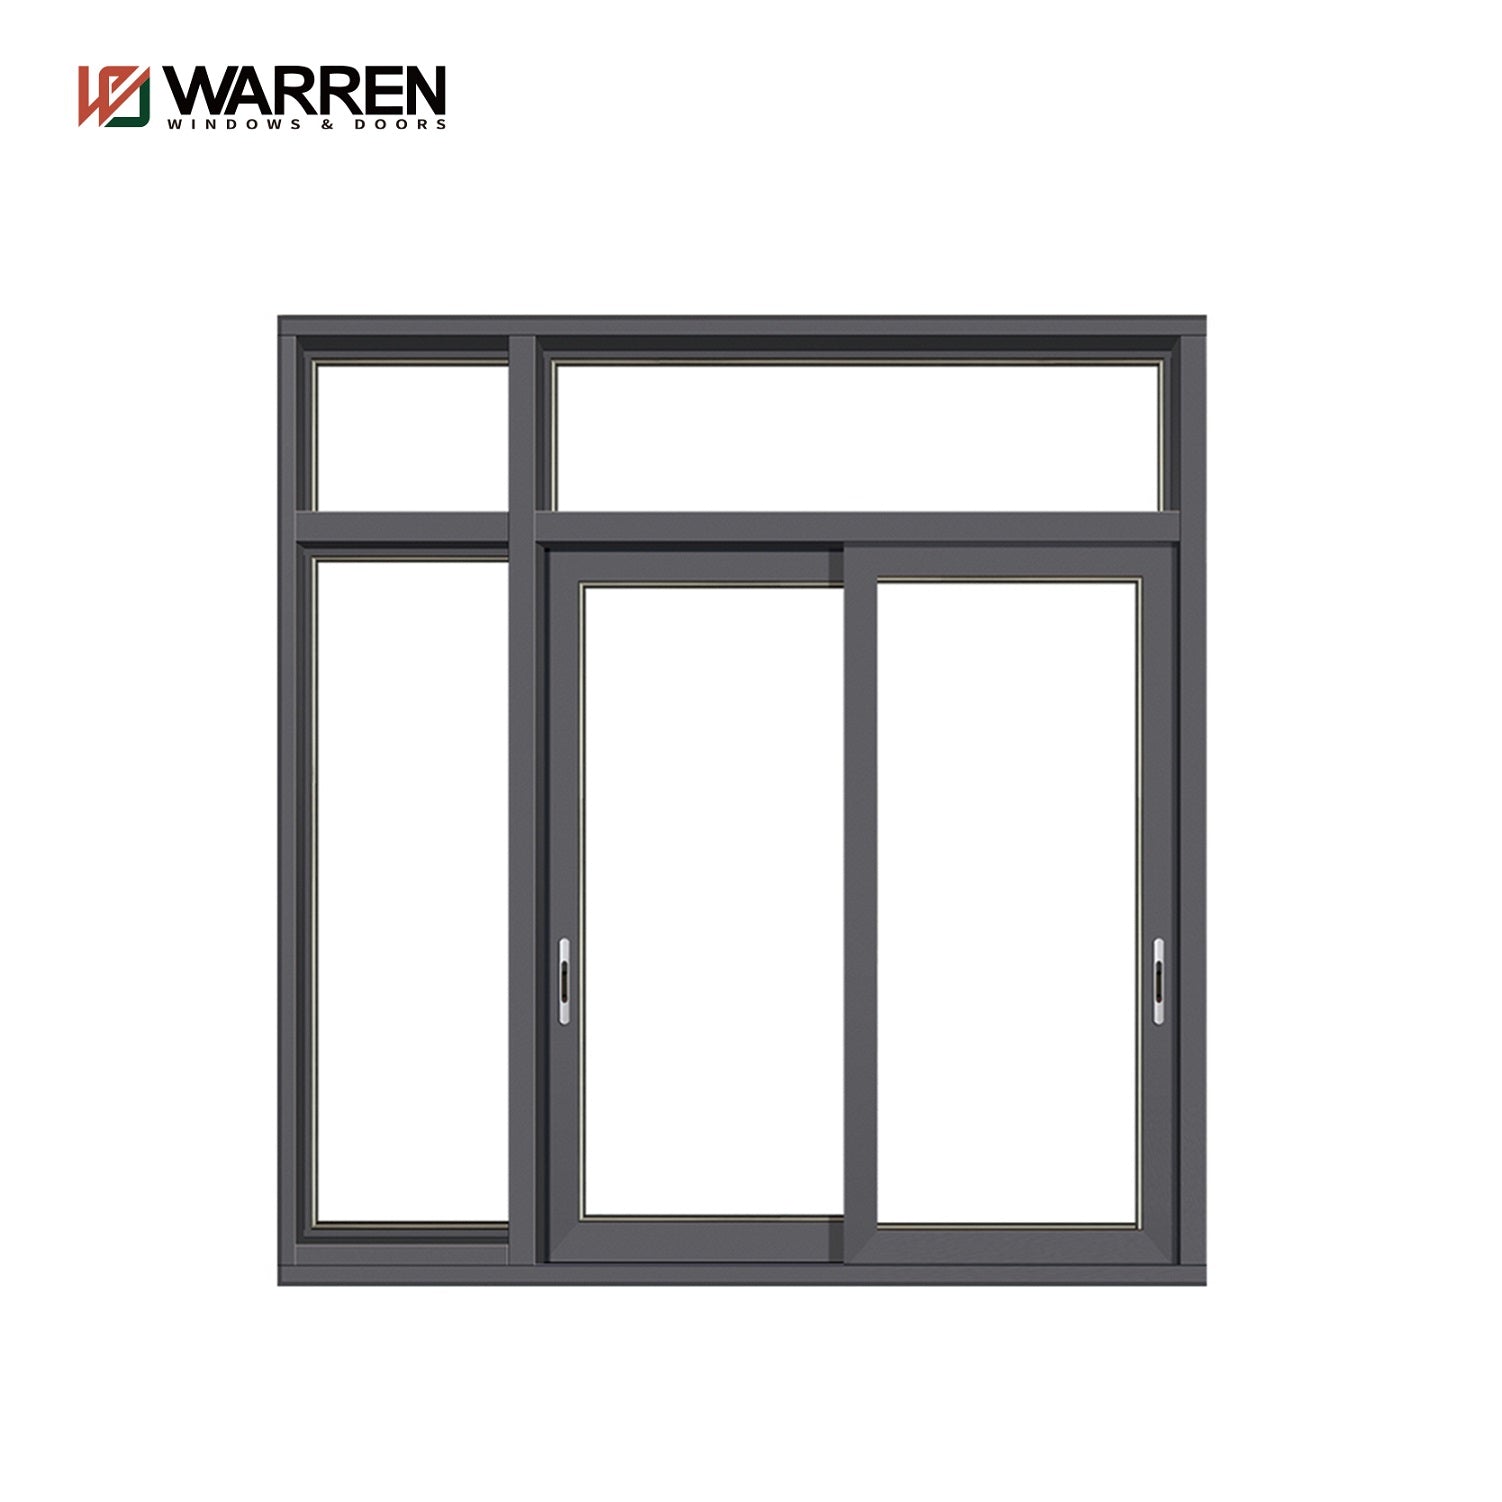 Warren customized 72 x 36 72 x 48 96x48 window best storm types of aluminium sliding window price